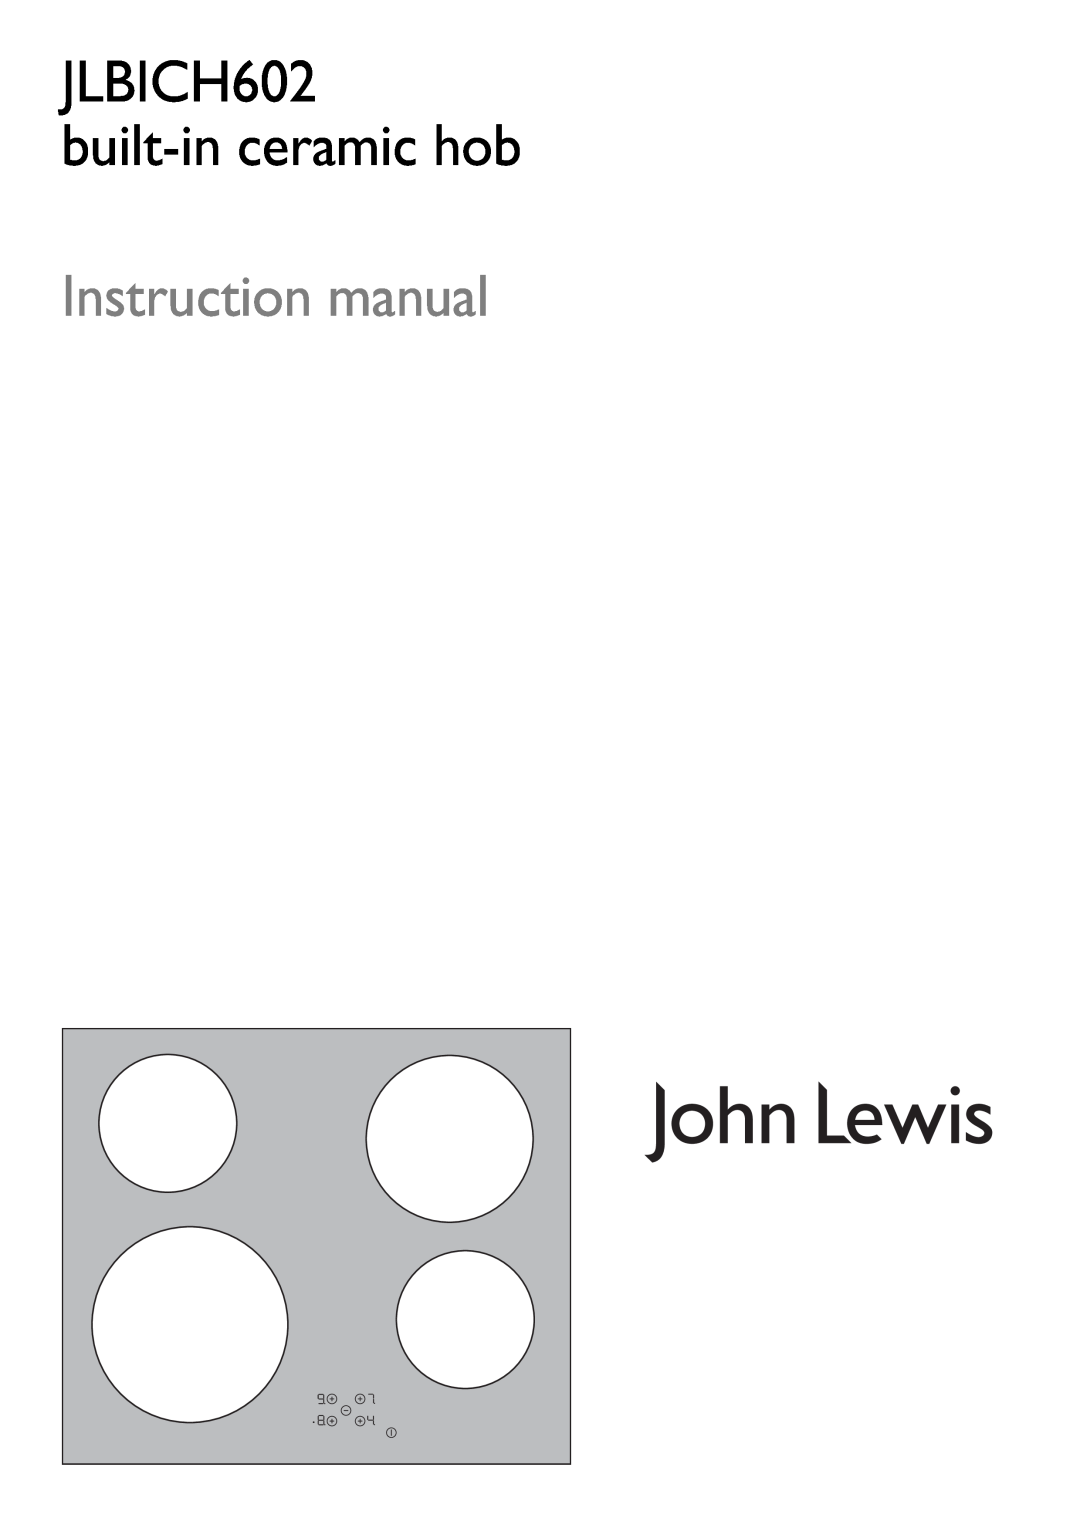 John Lewis instruction manual JLBICH602 built-in ceramic hob 